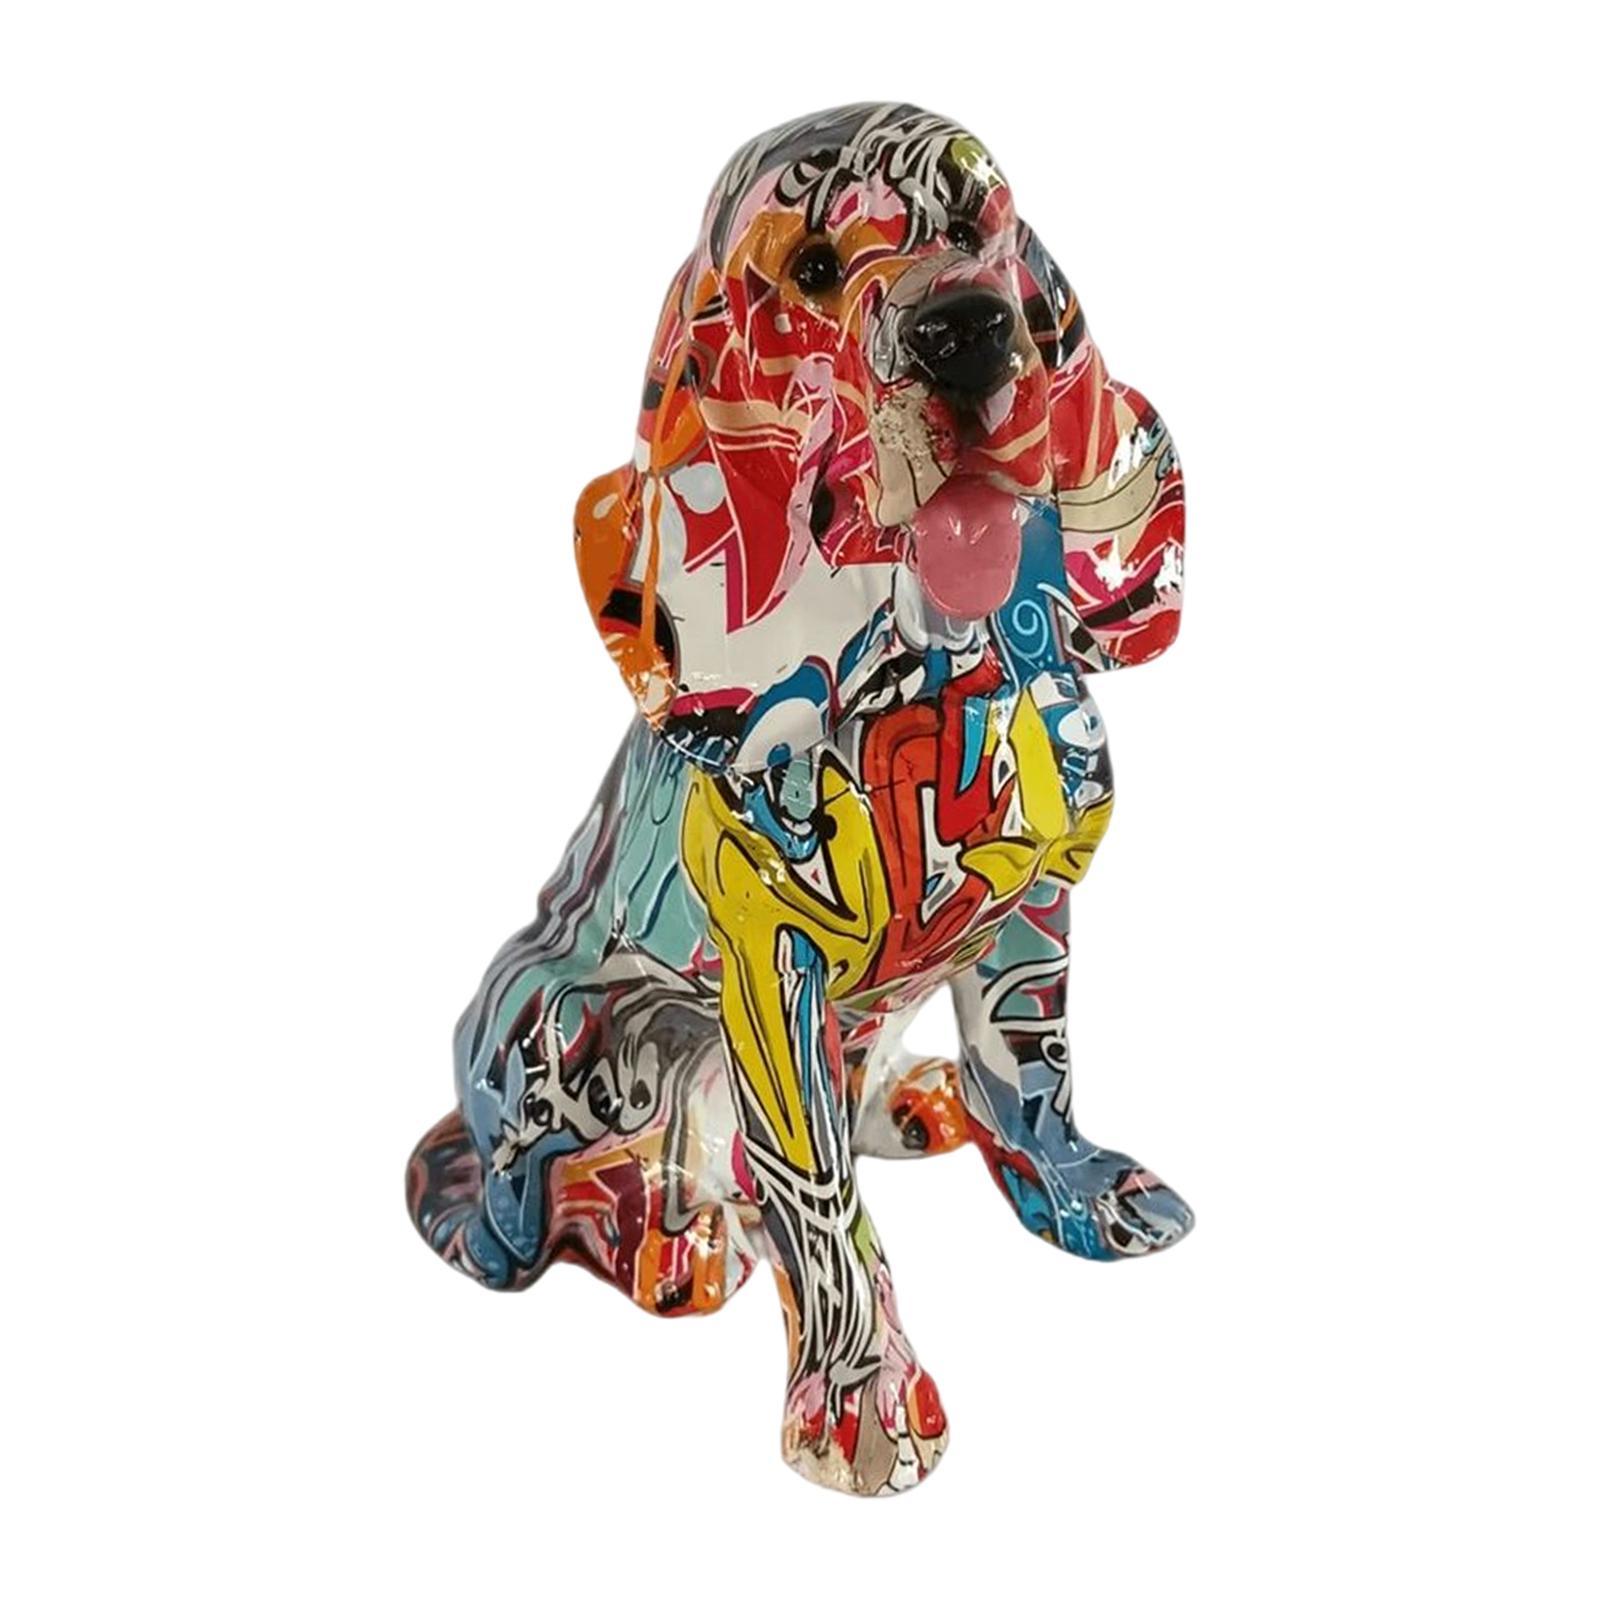 Colorful Dog Statue Animal Figure Home Decor Dog Graffiti Figurine Sculpture